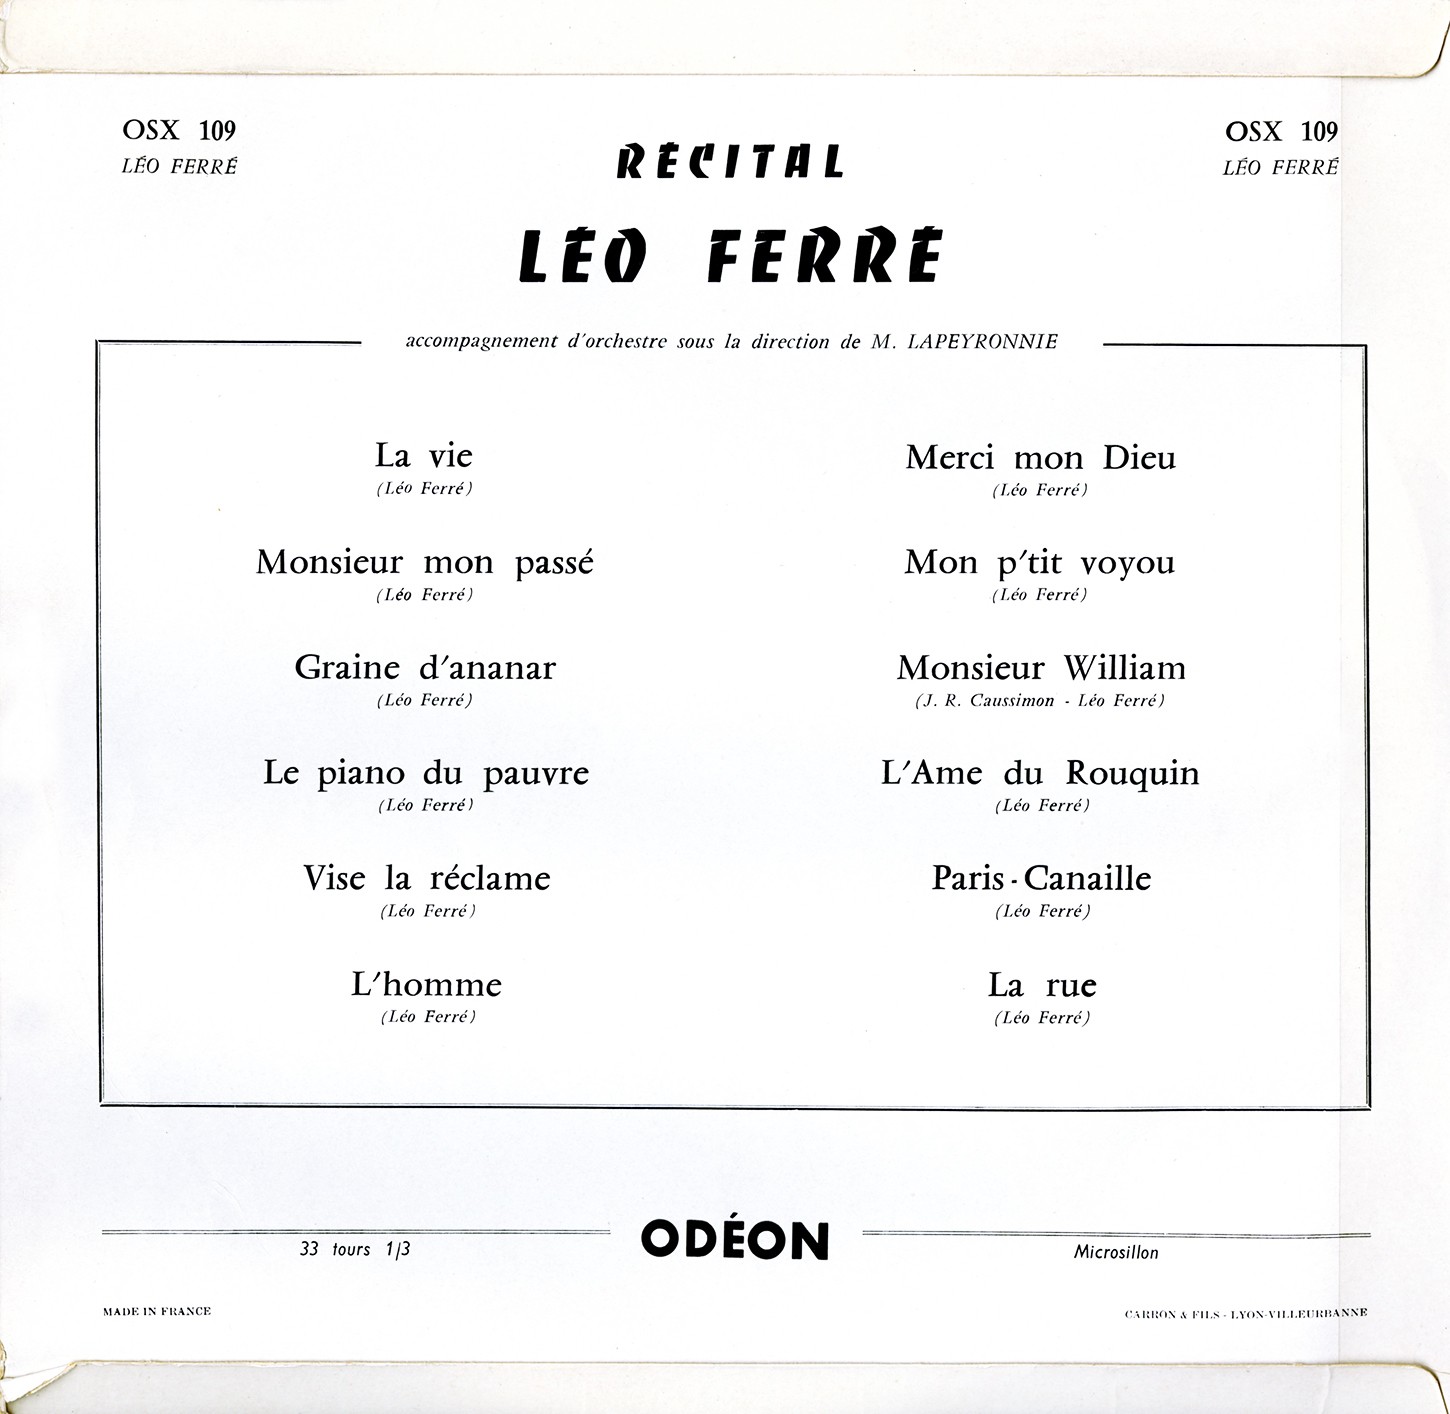 1954-Album Récital Léo Ferré à L'Olympia - Odéon OSX 109